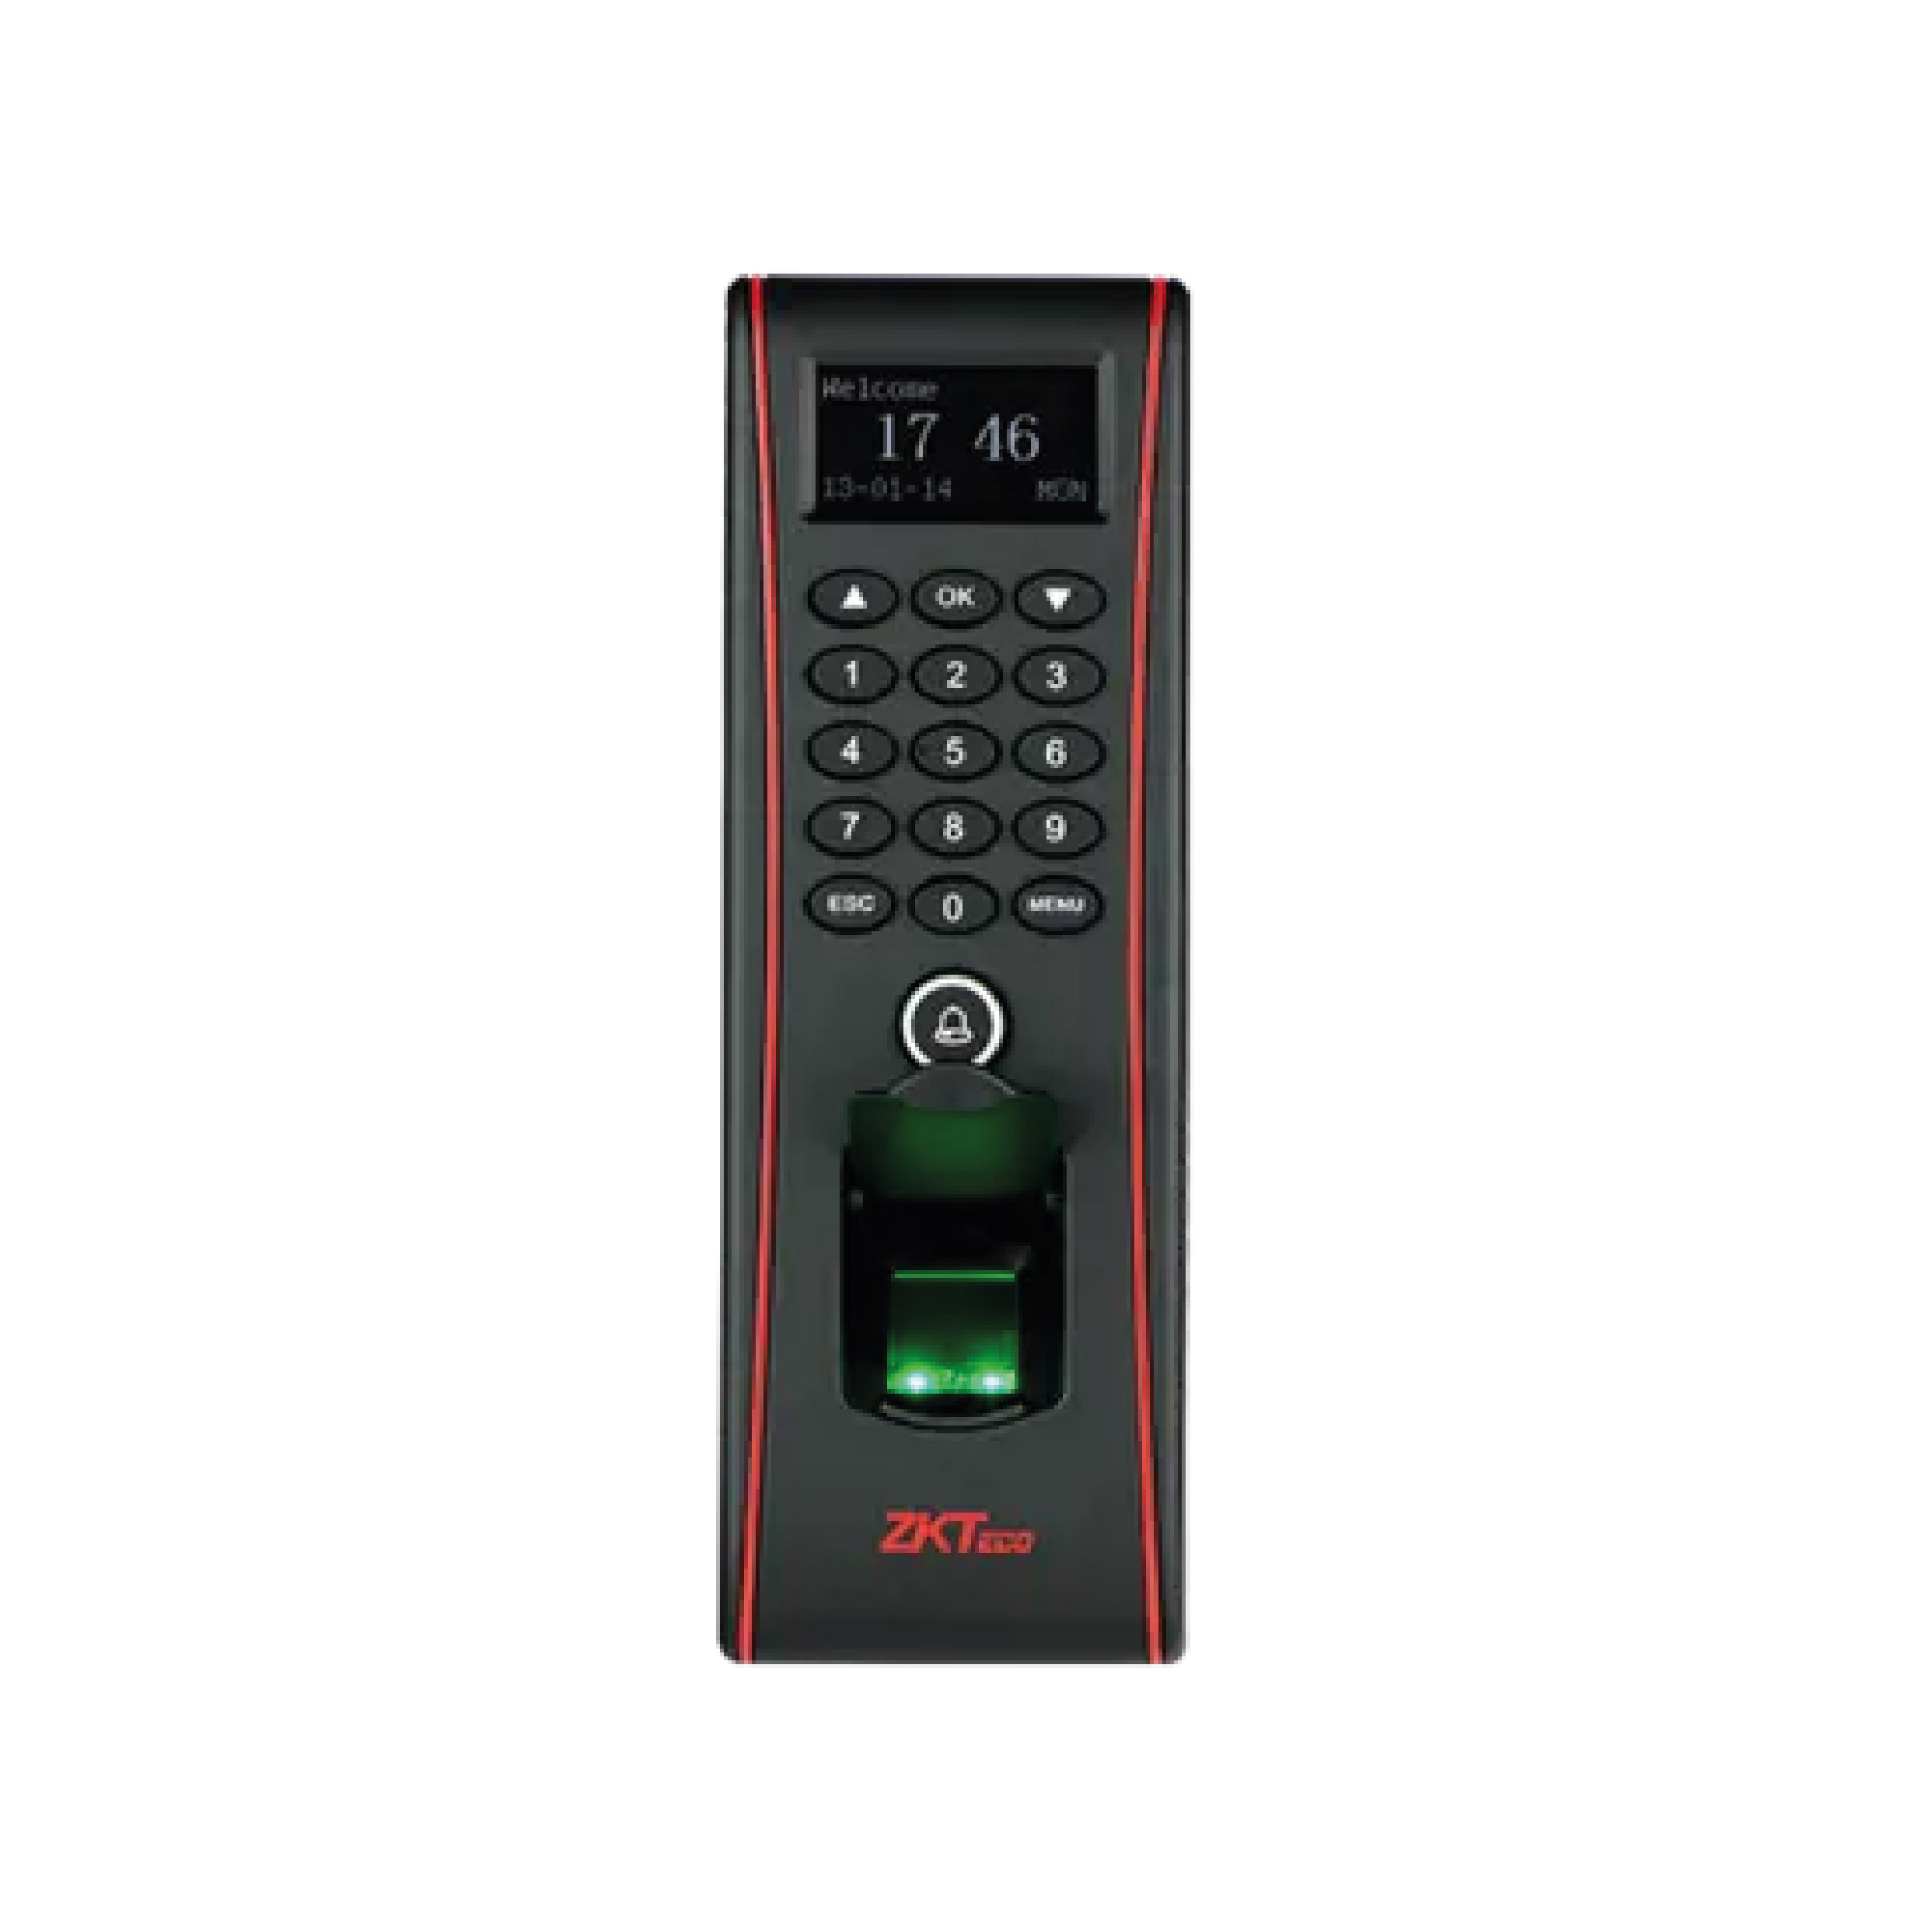 ZKTECO TF1700 Access control